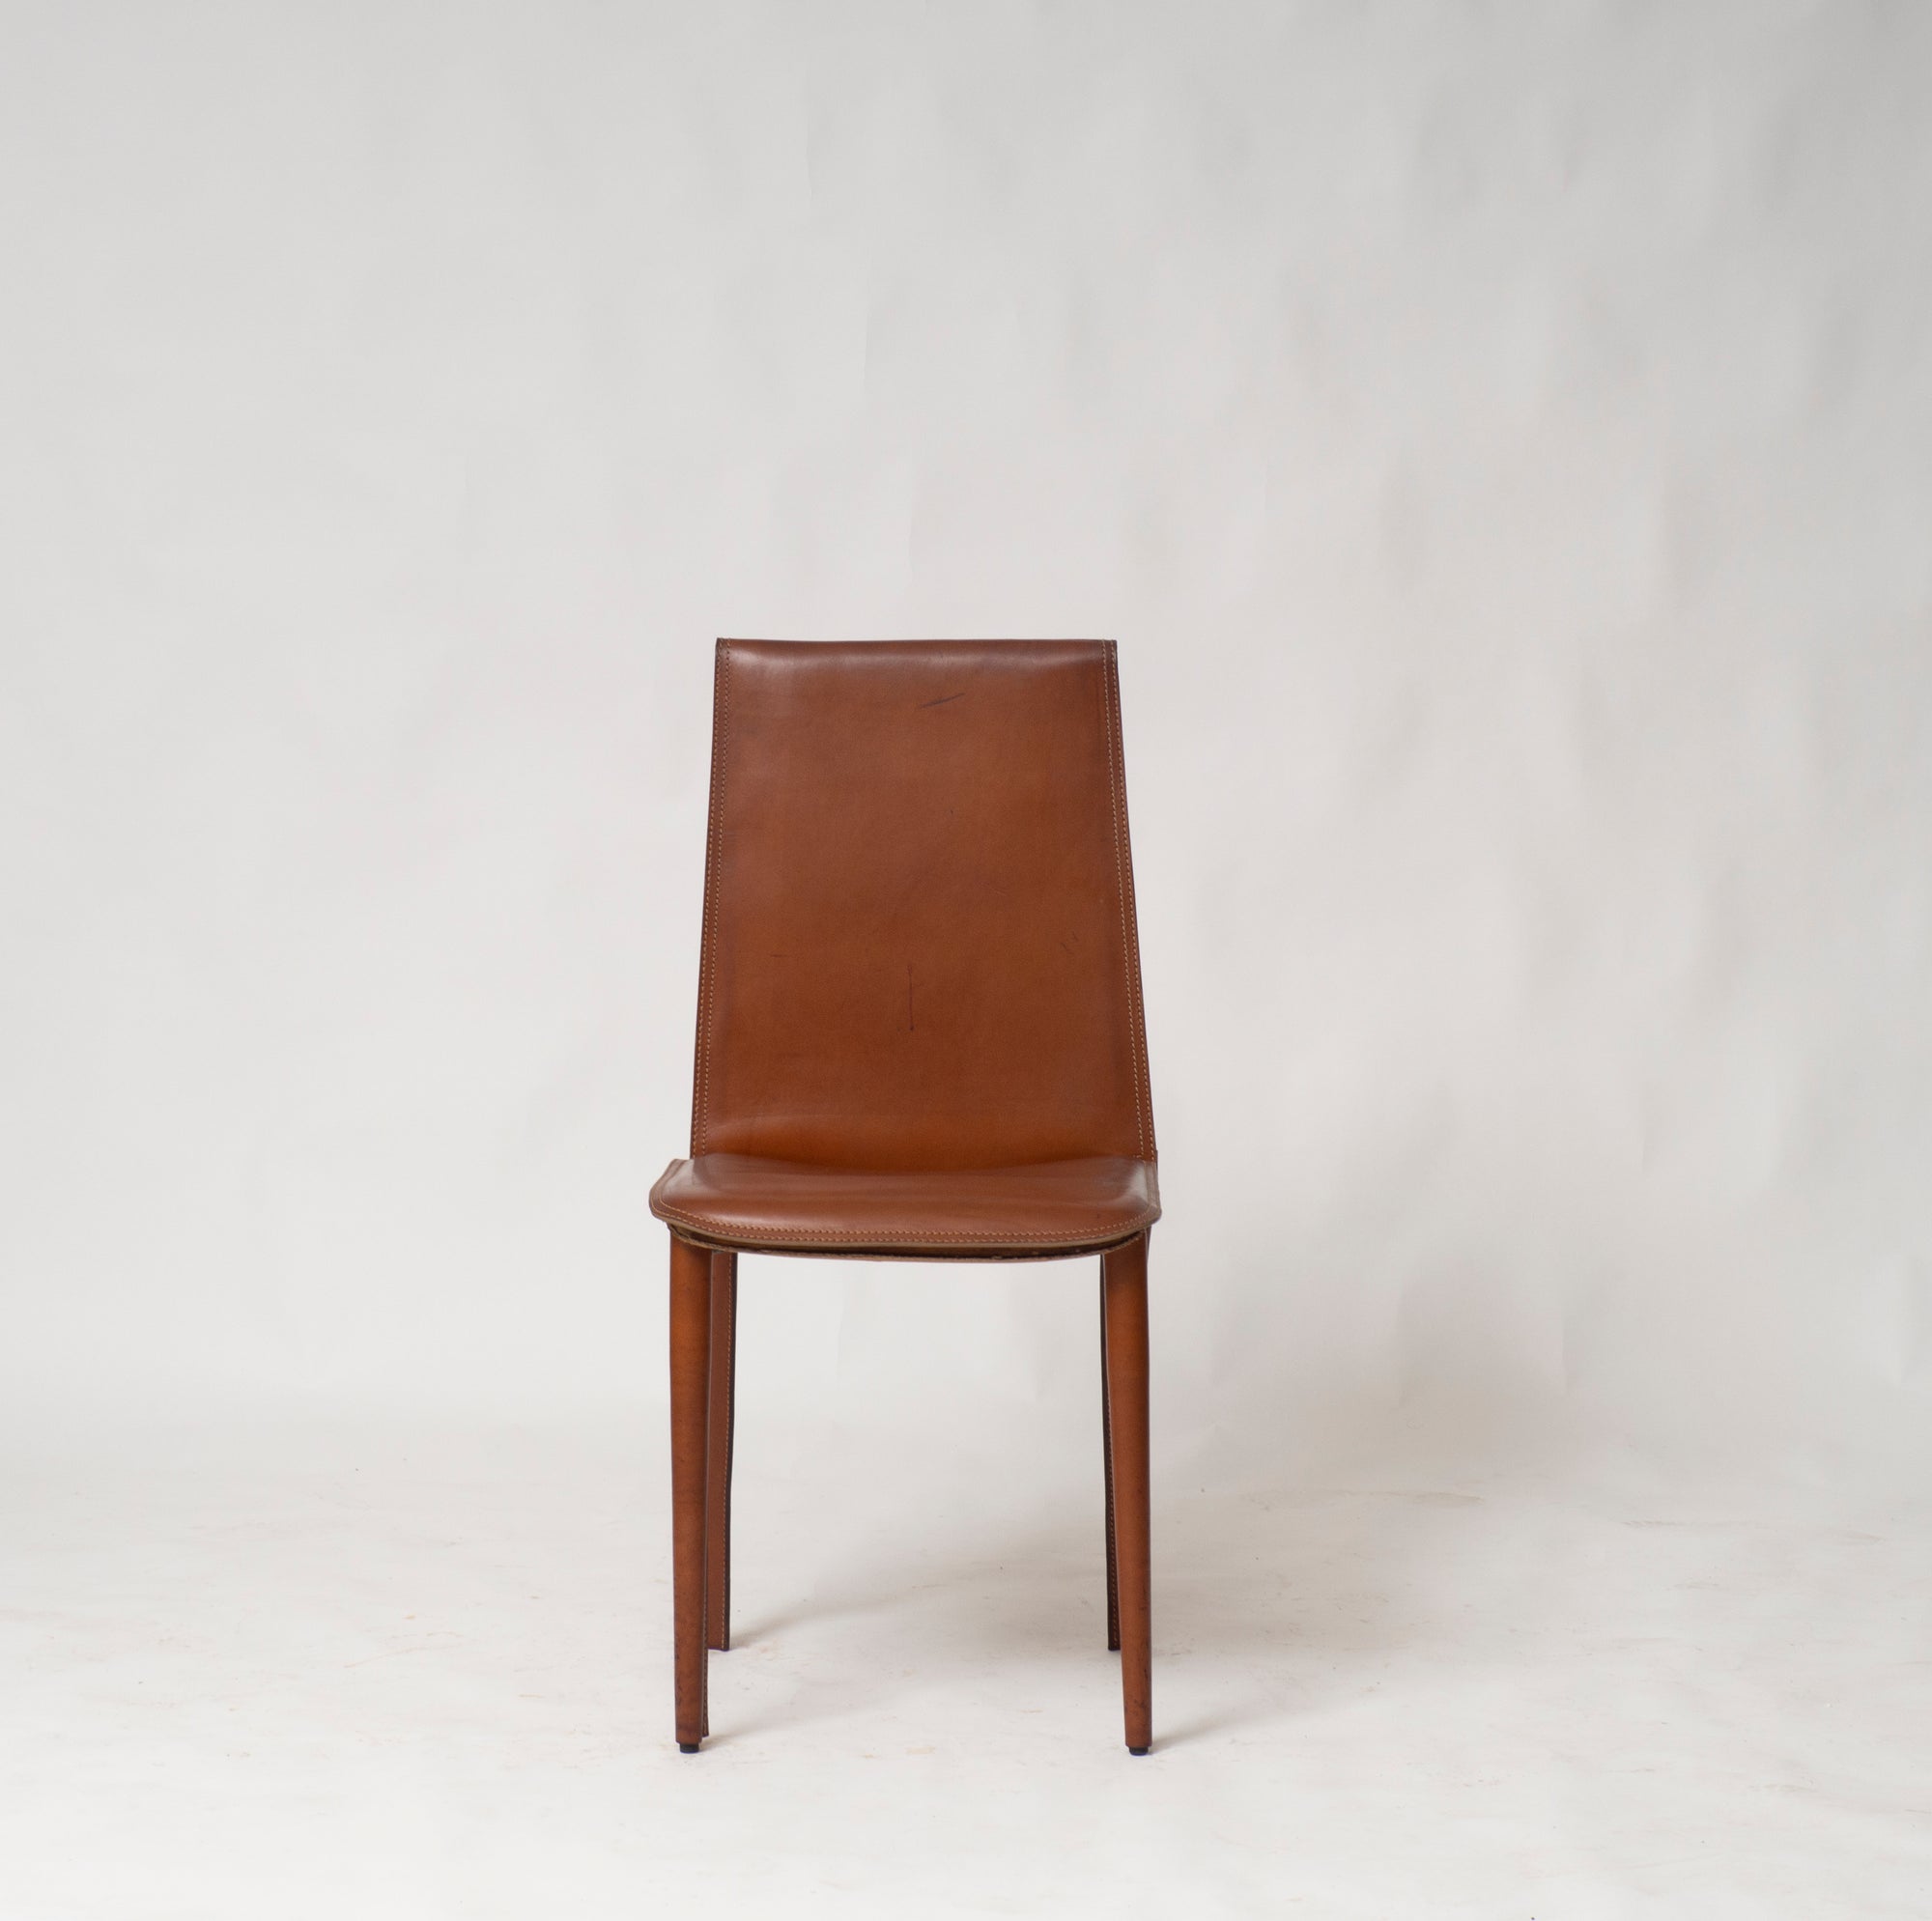 Ginerva Chair